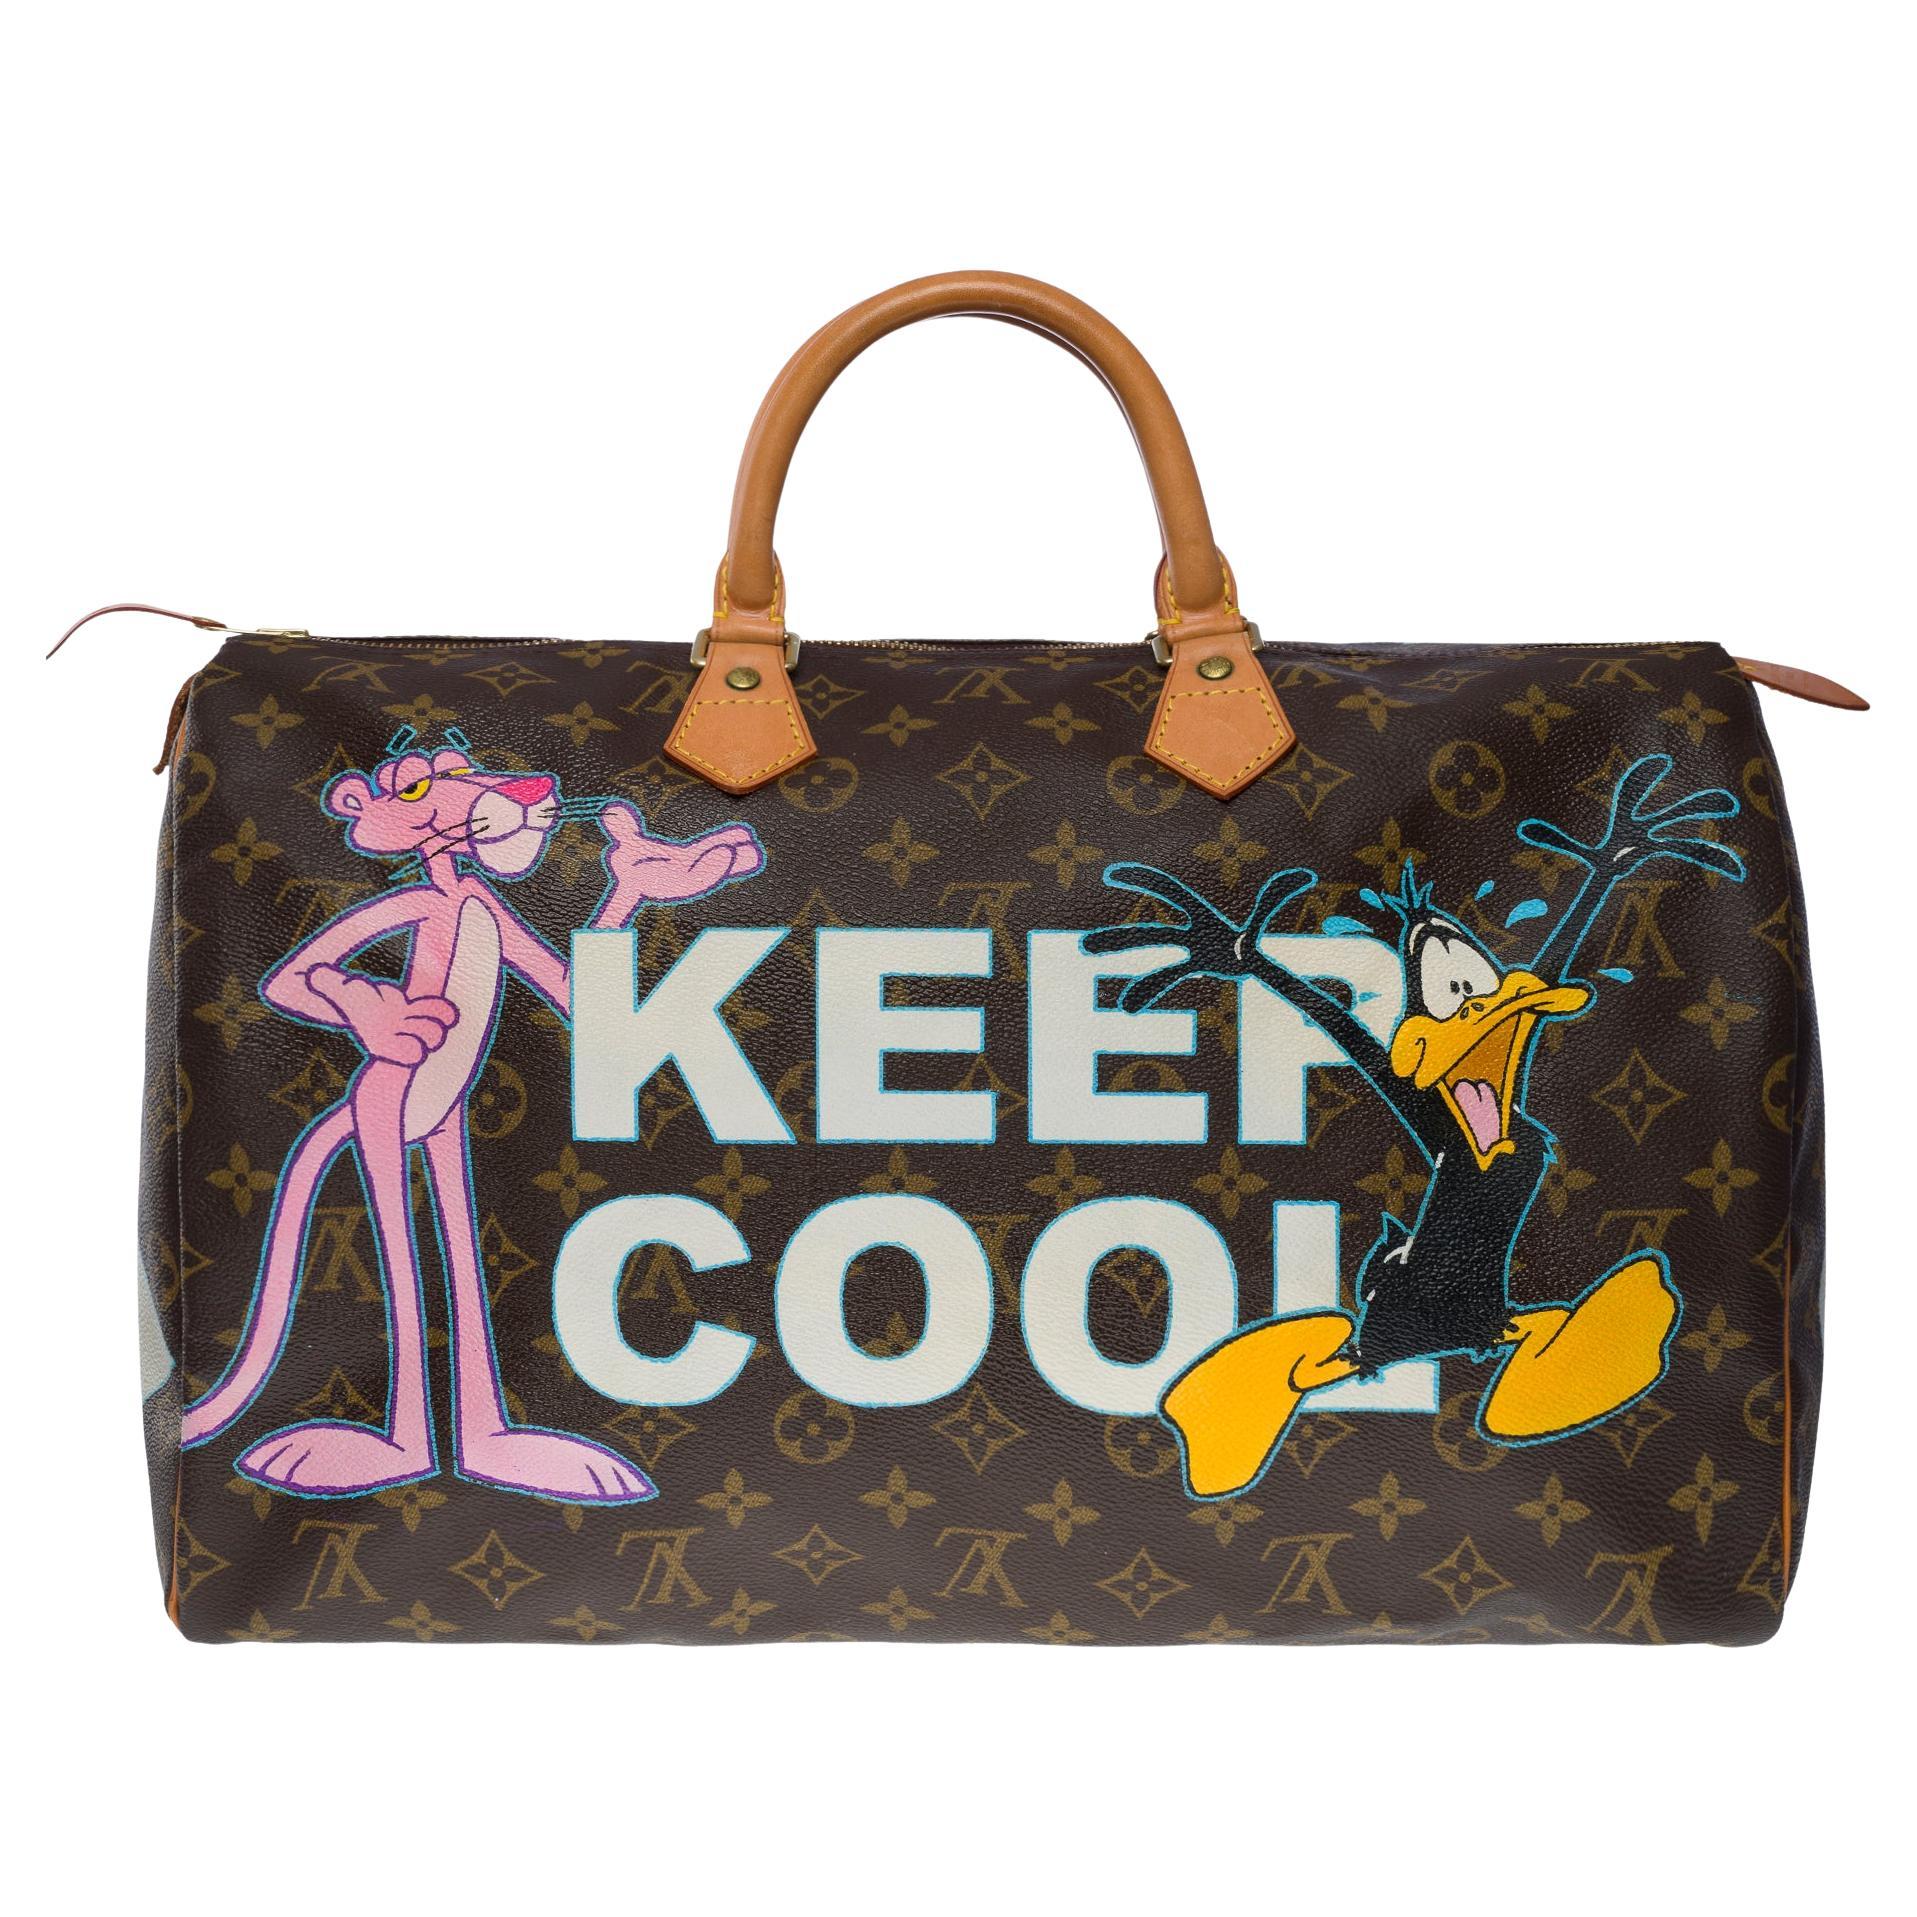 "Keep Cool" Customized Louis Vuitton Speedy 40 handbag in brown Monogram canvas  For Sale